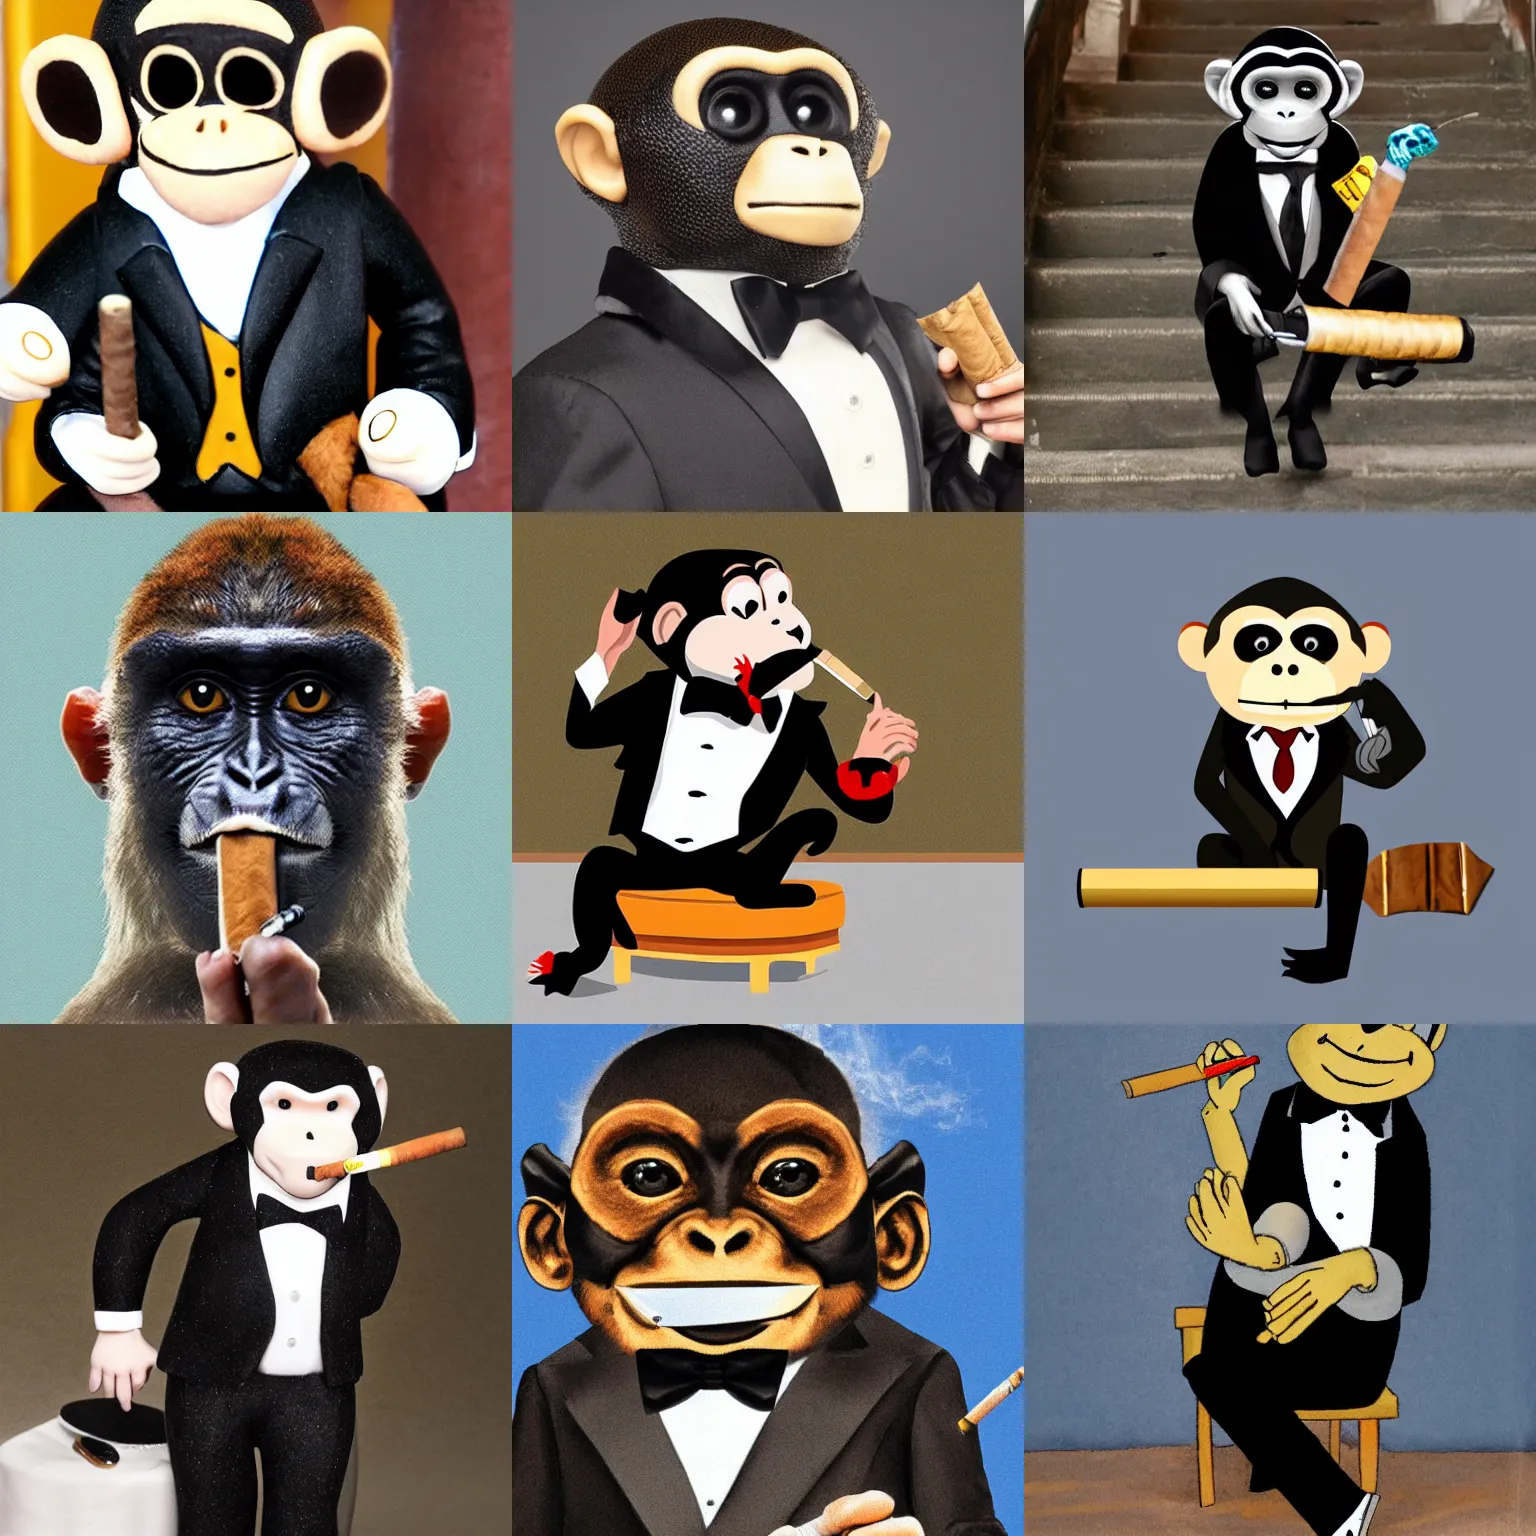 Prompt: Monkey in Tuxedo smoking cigar